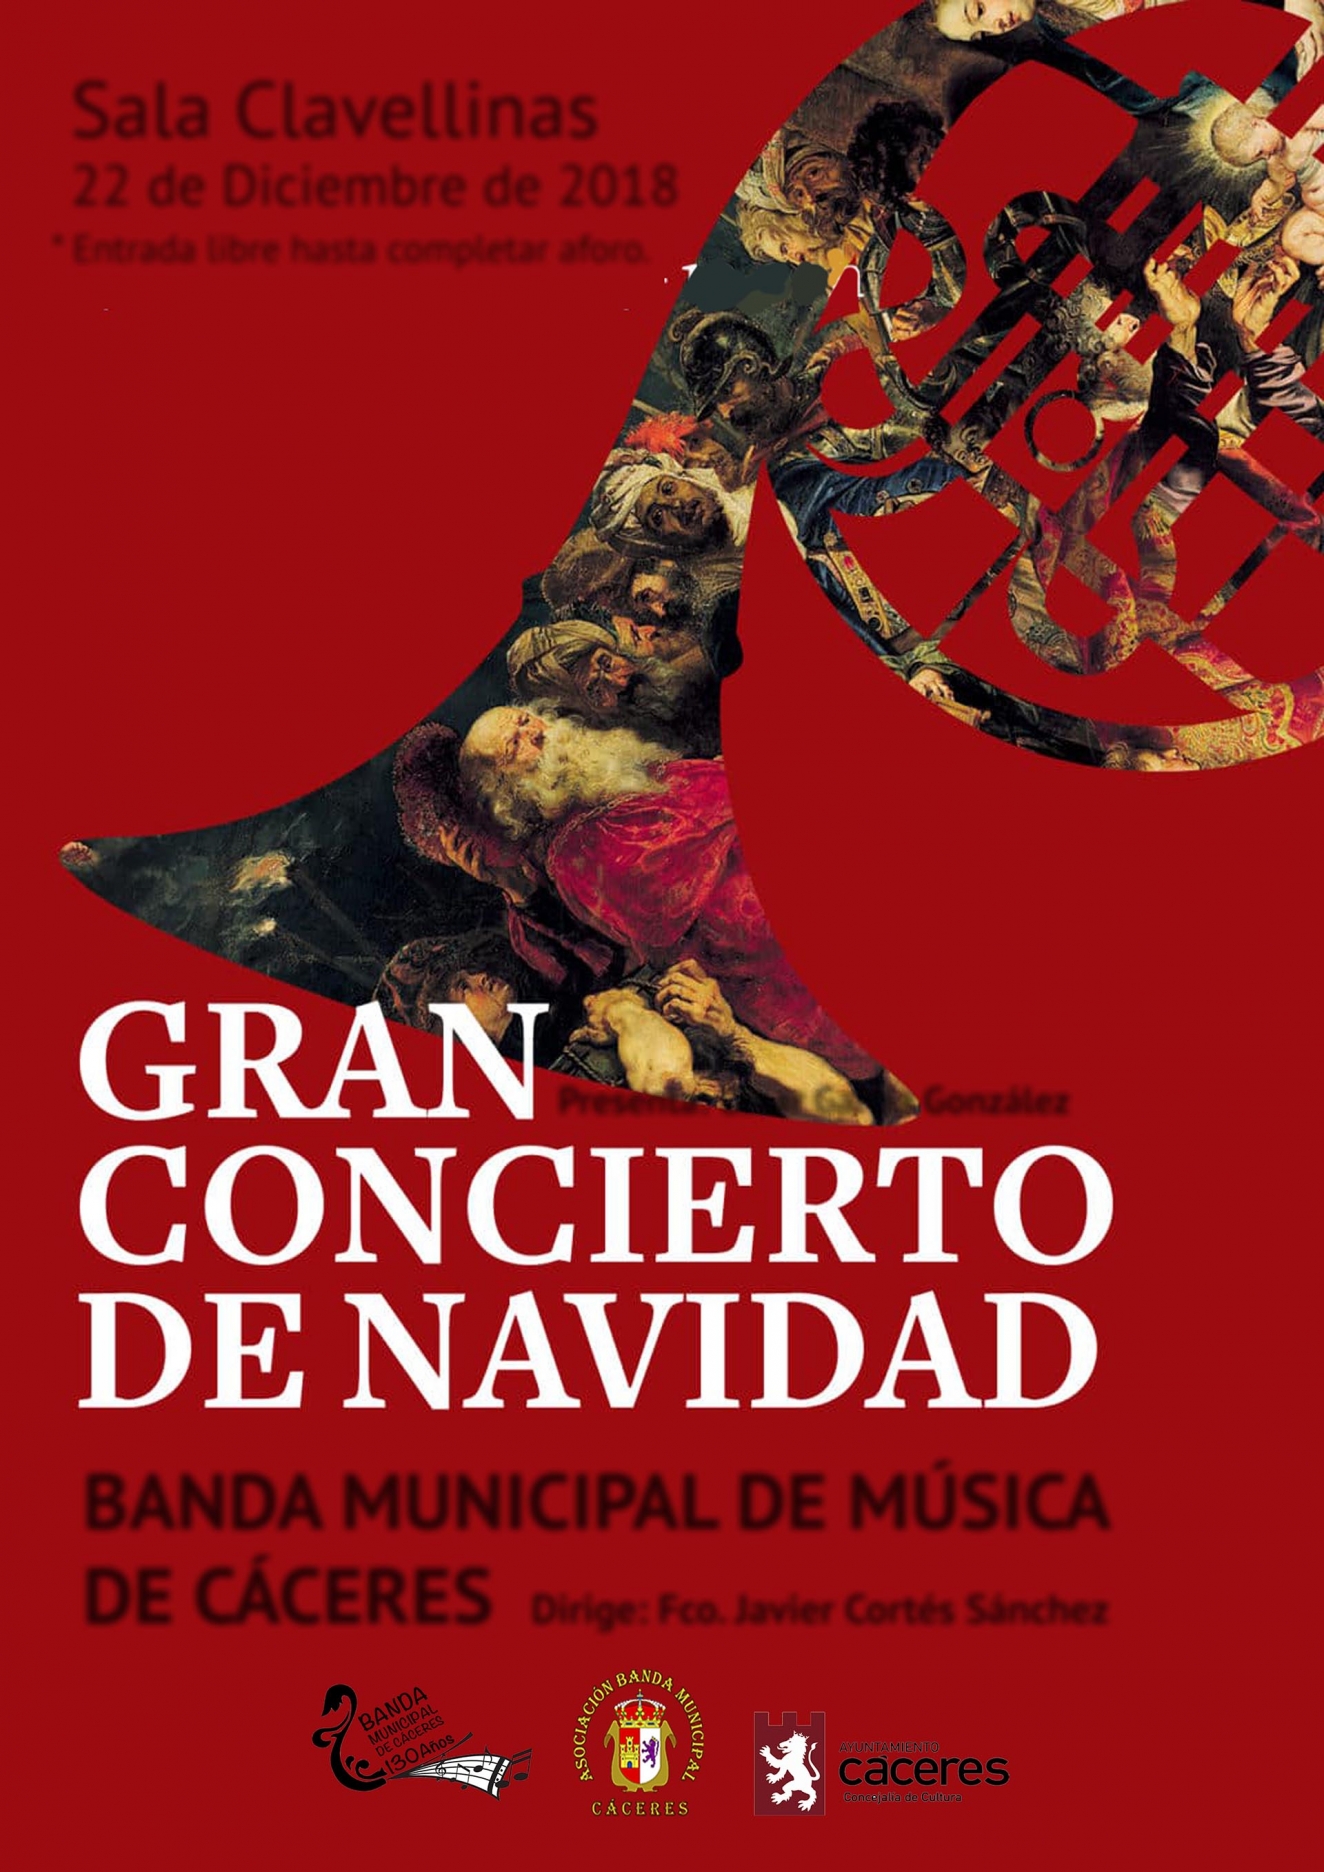 Gran concierto de navidad: Banda municipal de música de Cáceres